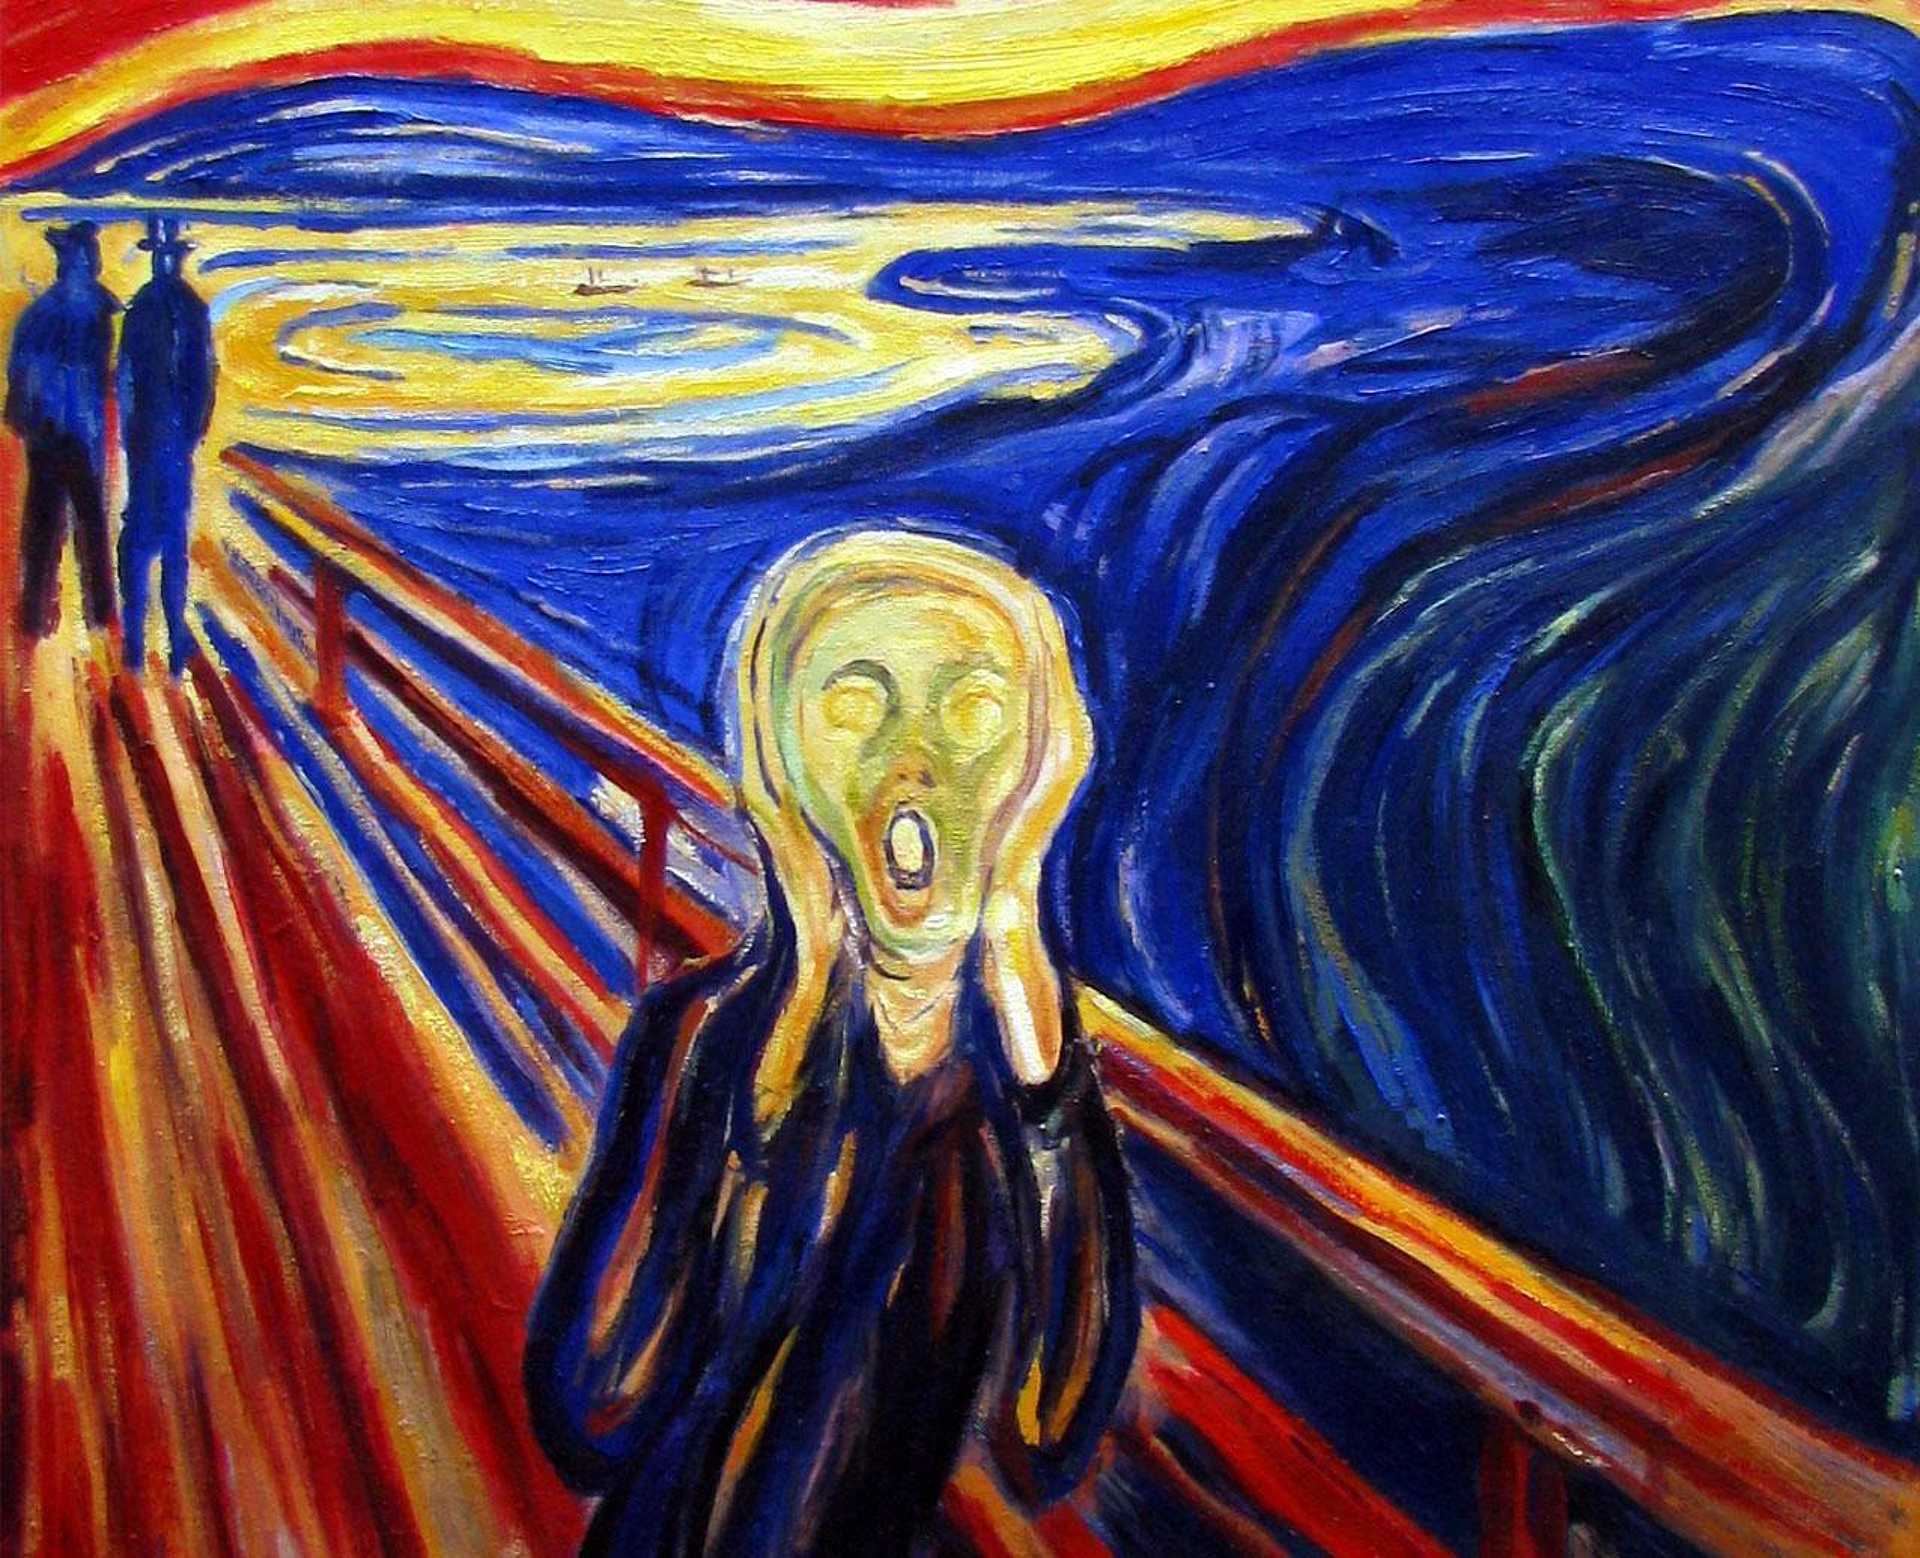 Edvard Munch’s “The Scream”